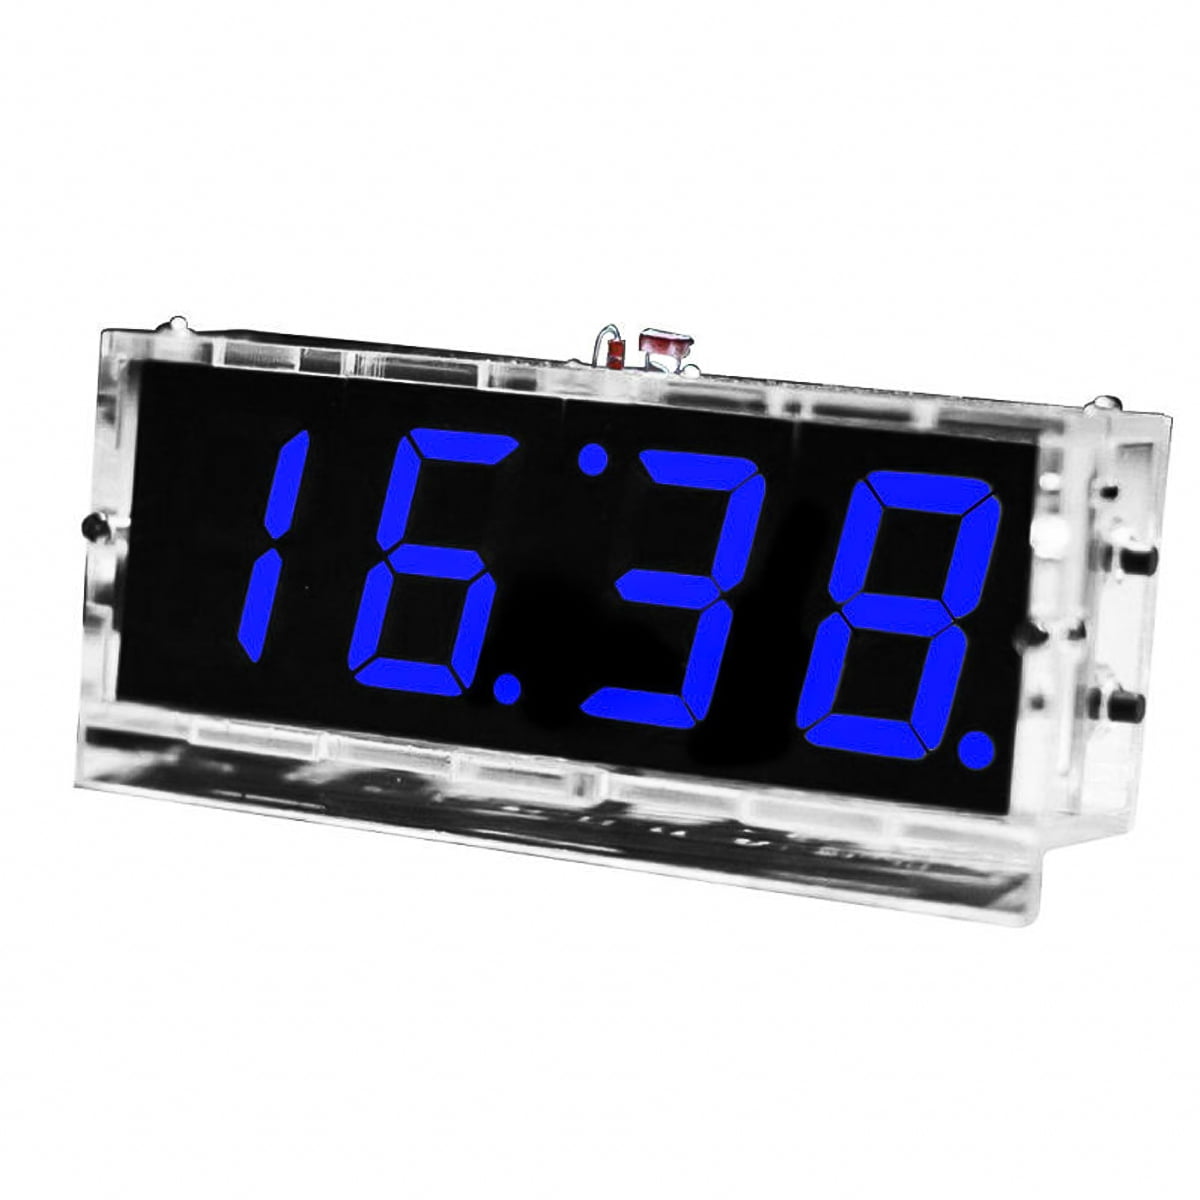 NEW  DIY kits Digital LED Electronic Microcontroller Clock Large Screen display 